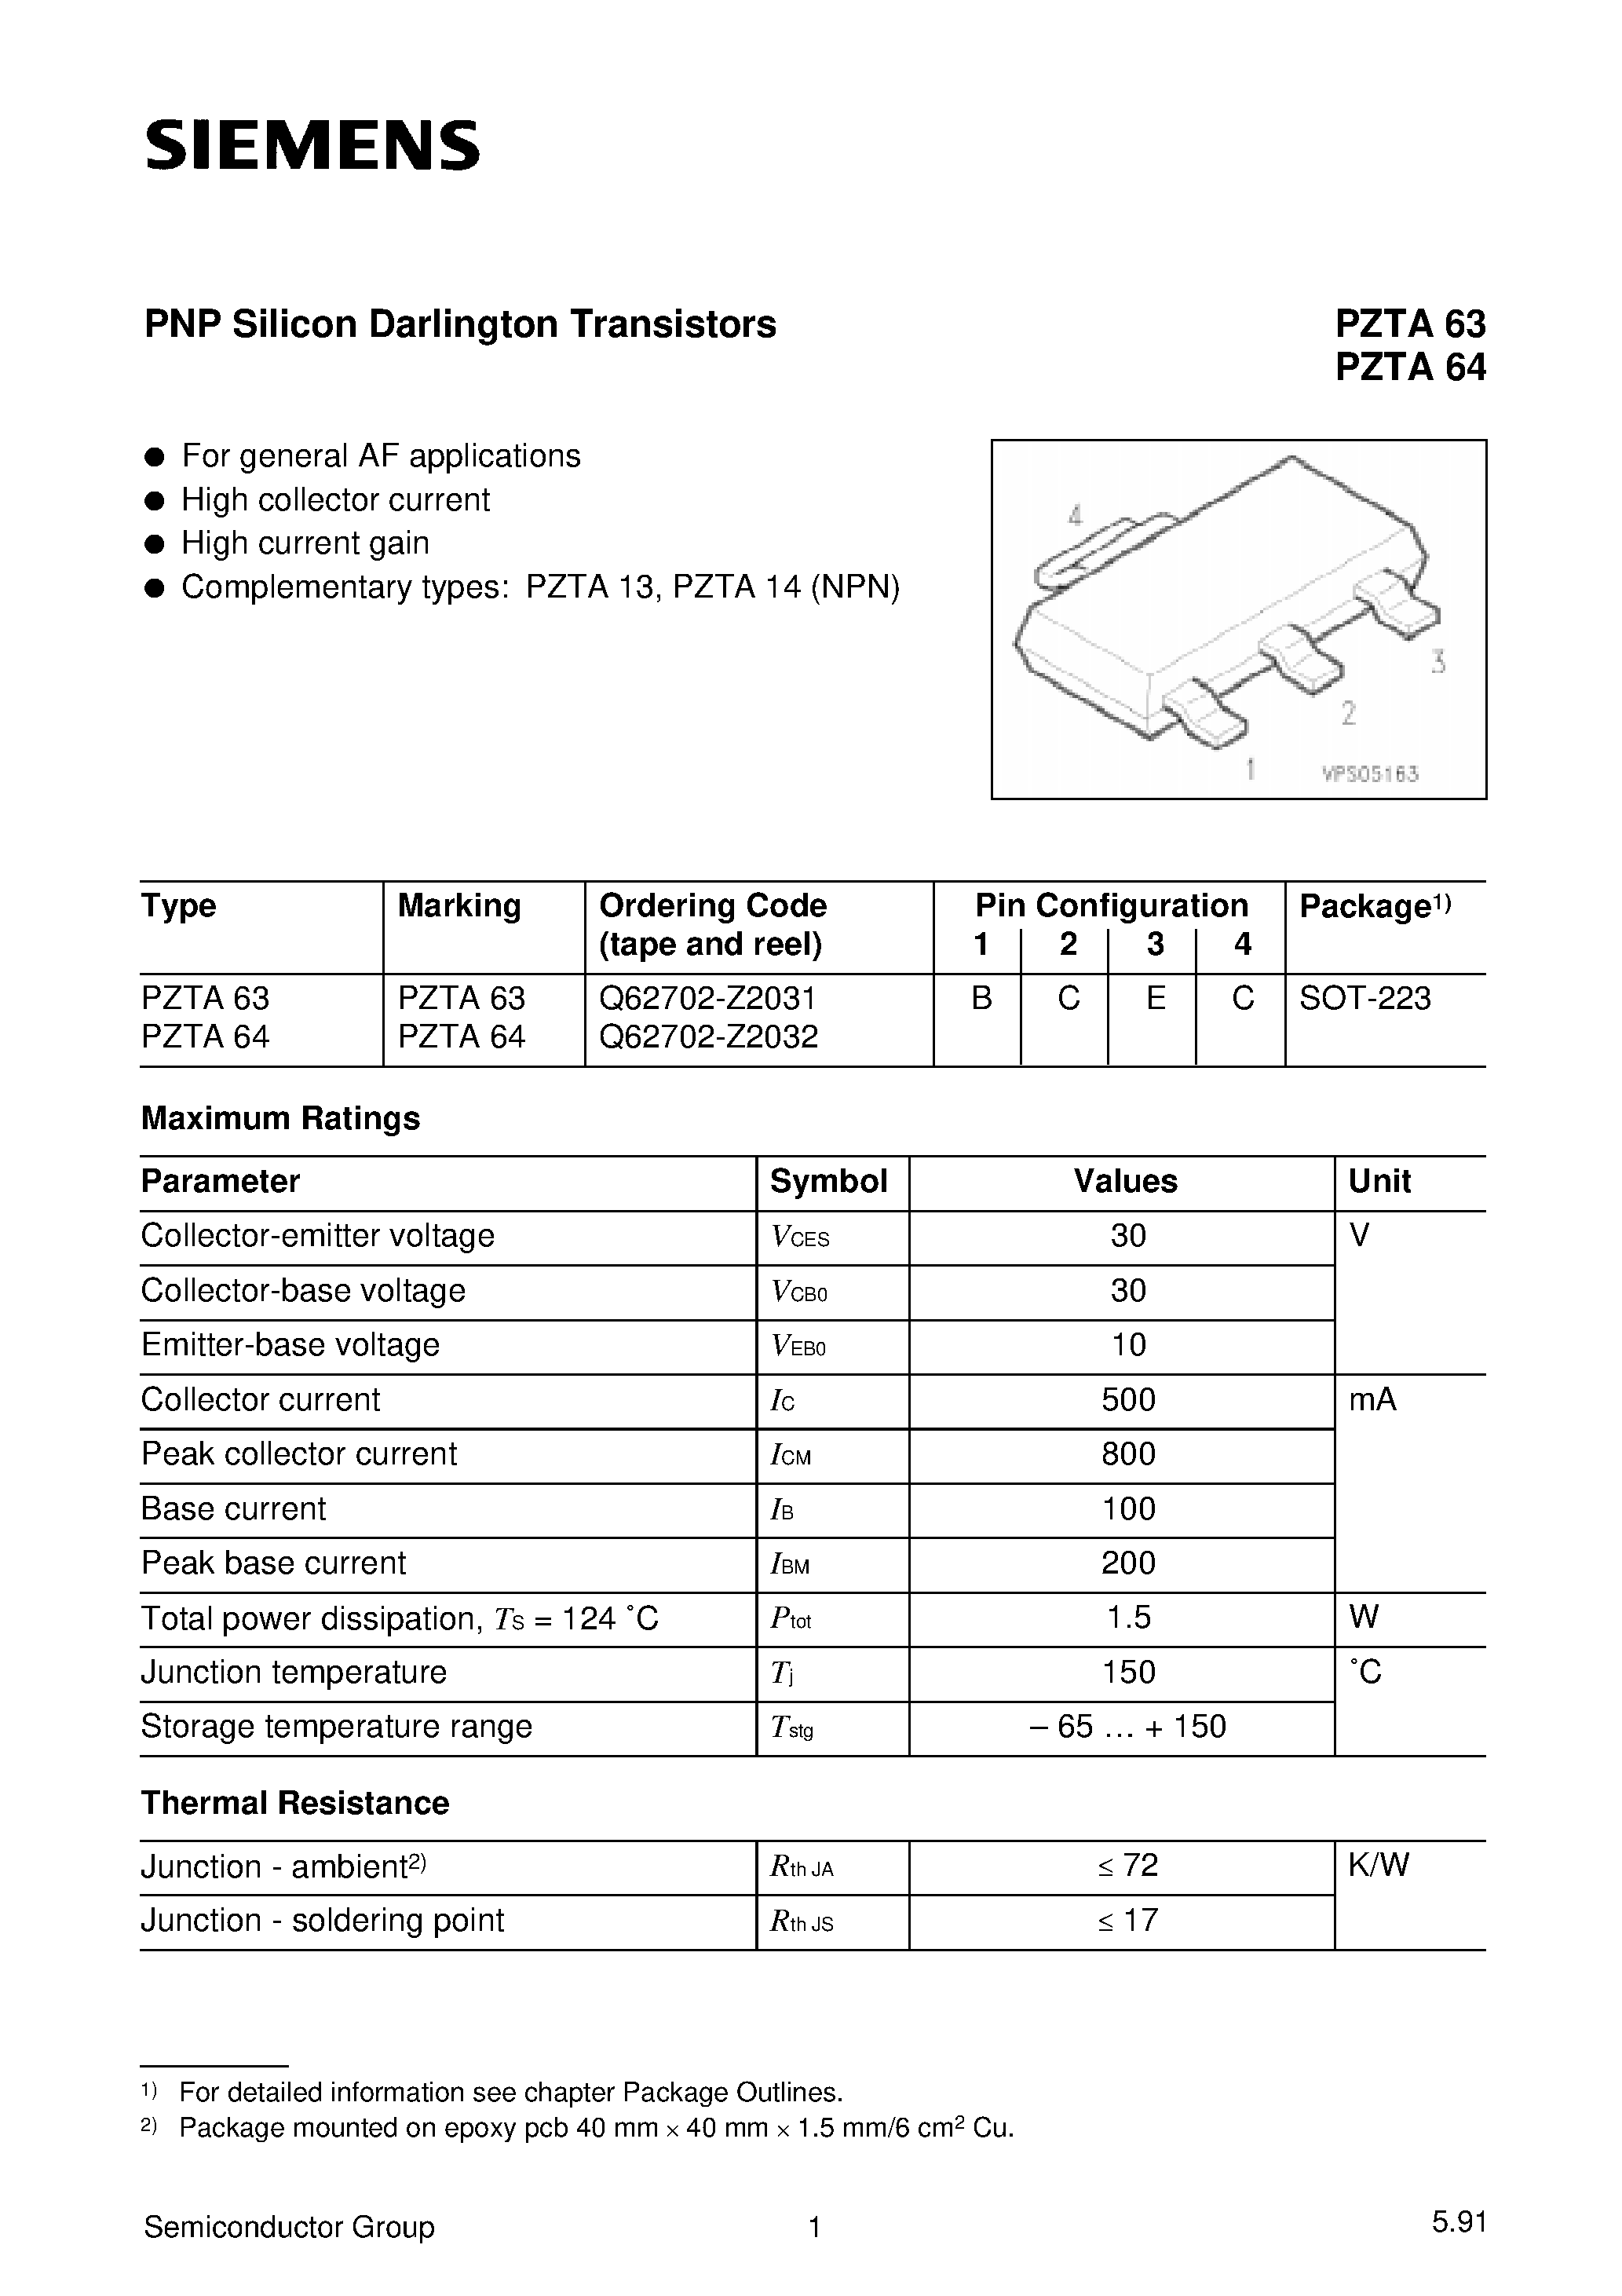 Datasheet PZTA63 - PNP Silicon Darlington Transistors page 1